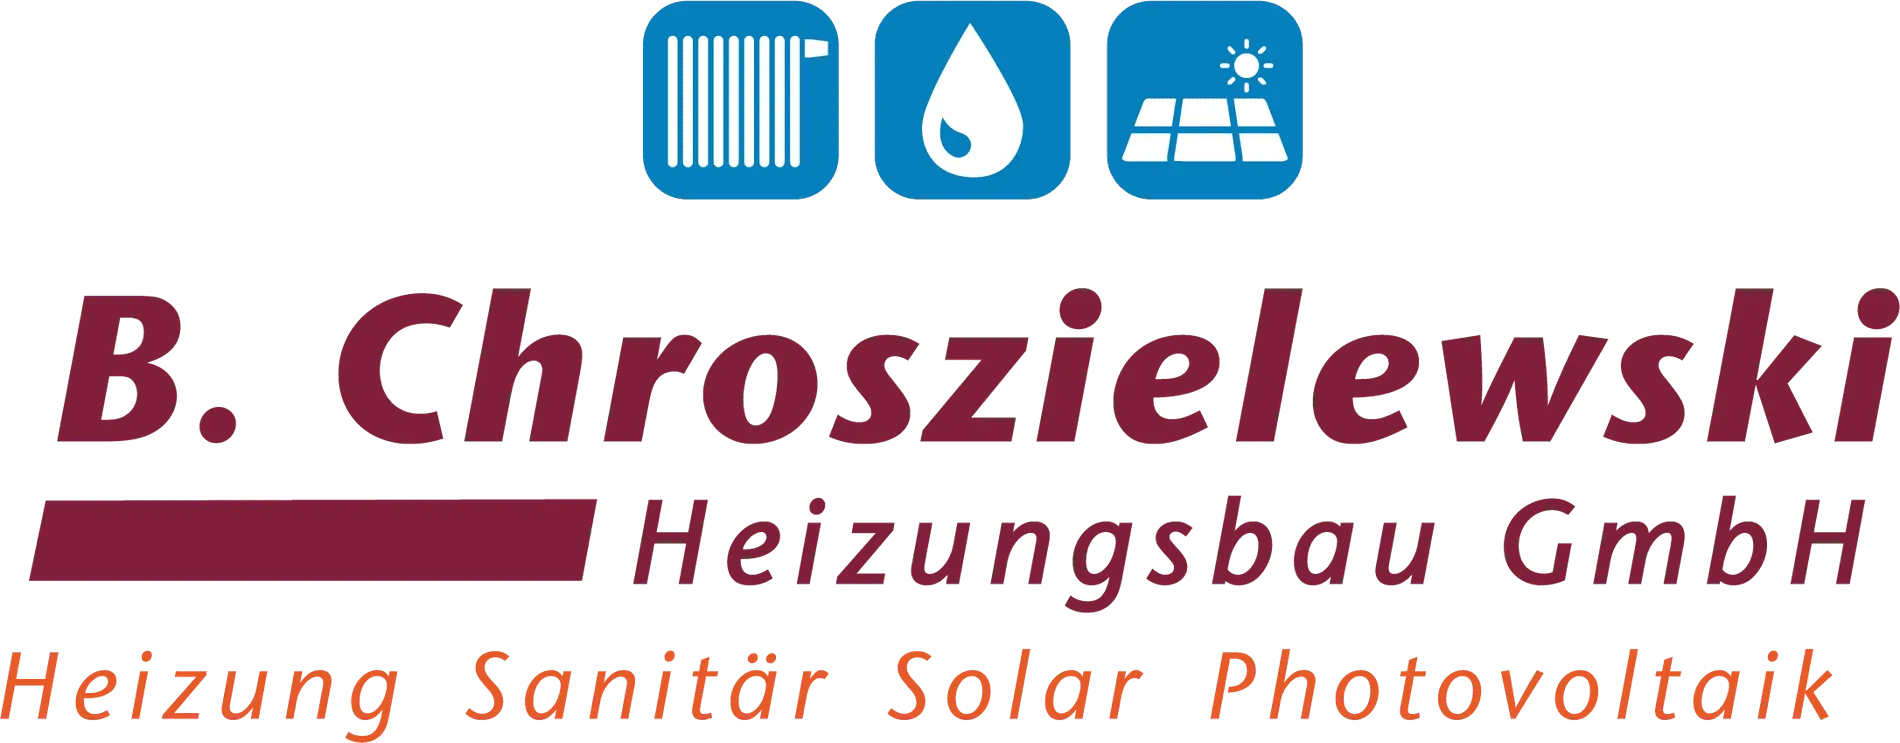 Logo Nachbauen_Bodo Chroszielewski.png